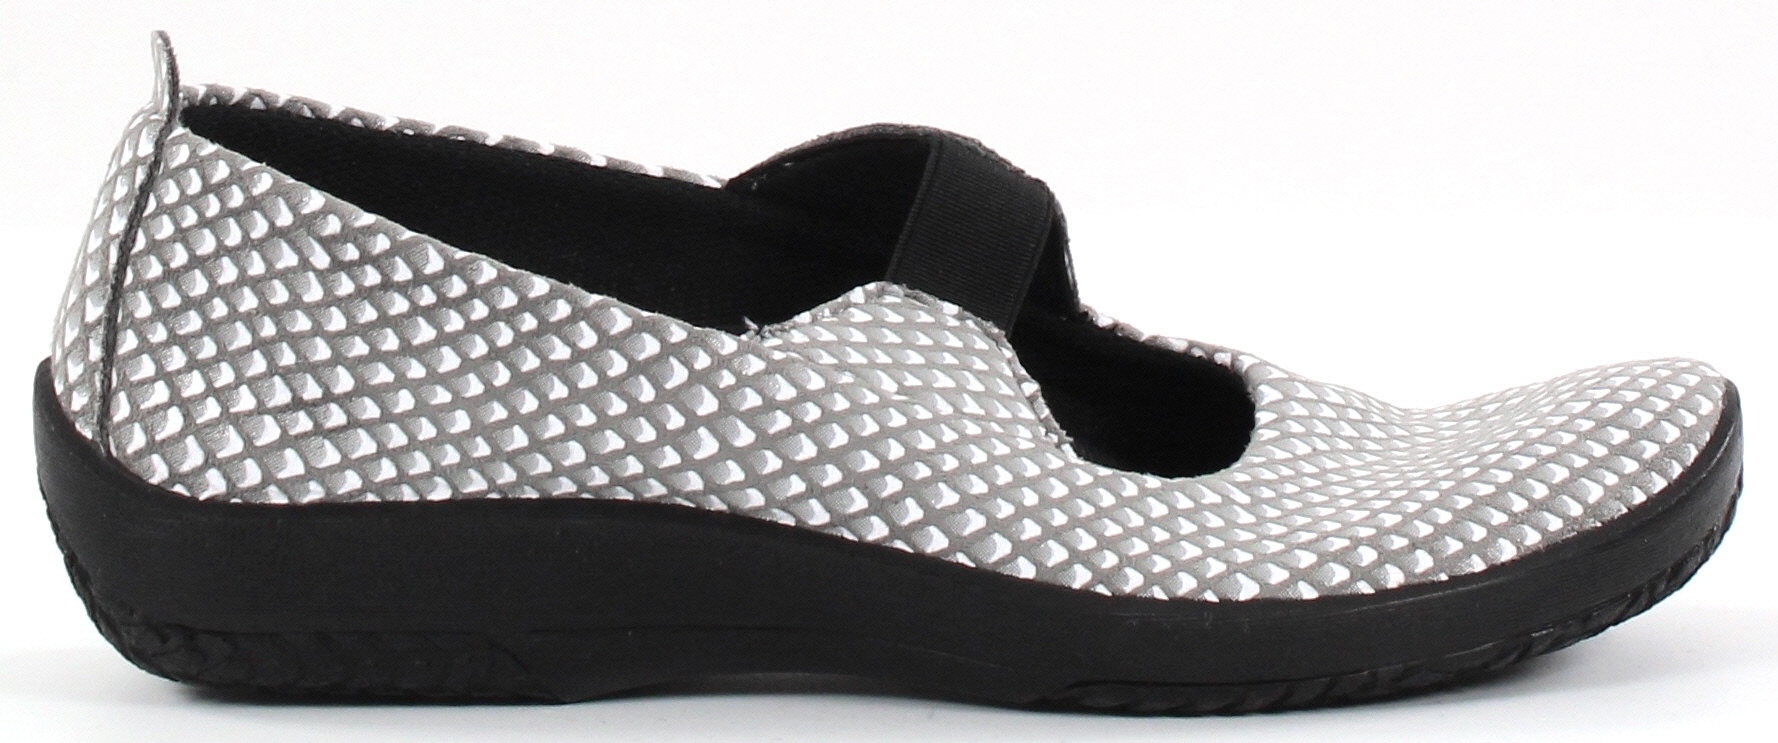 Arcopedico Walking Shoes Leina grey/white - Stilettoshop.eu webstore